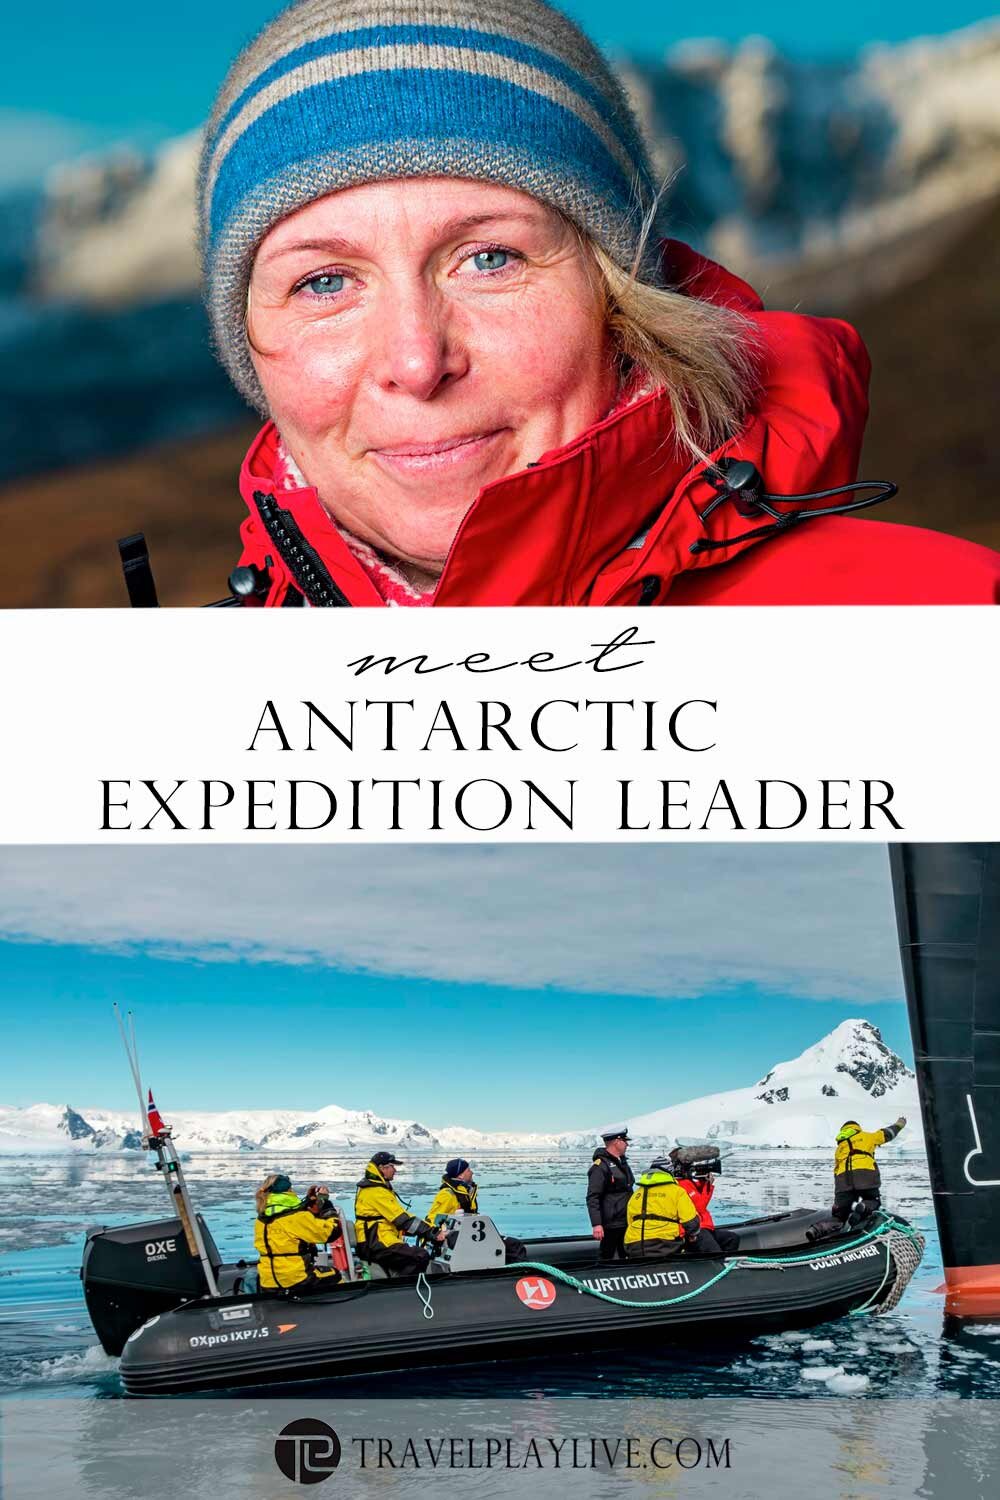 Karin-Strand-expedition-leader-Hurtigruten.jpg